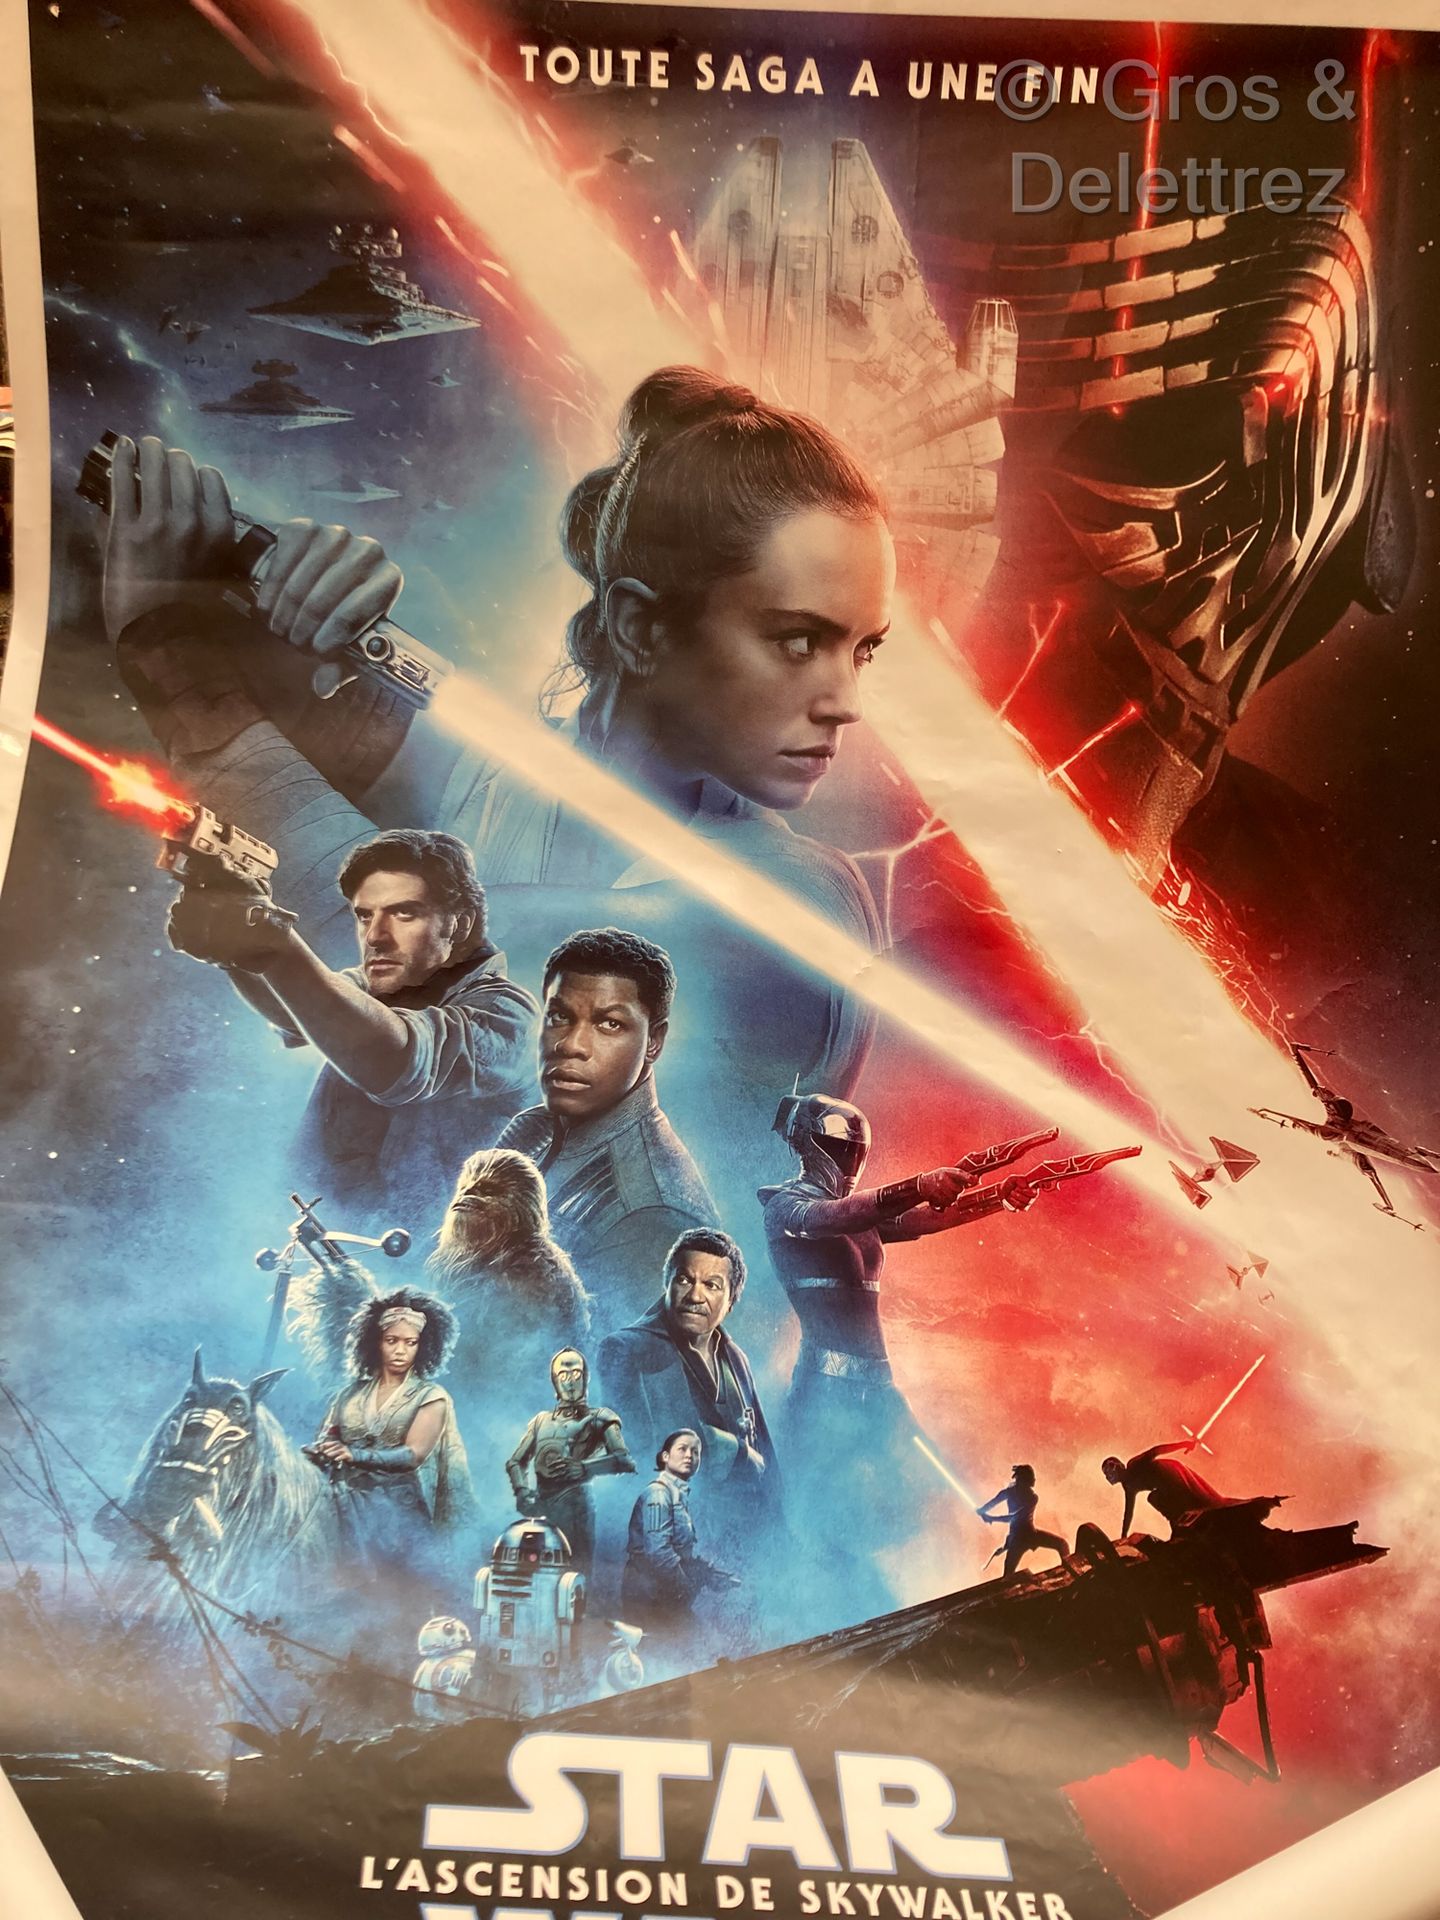 Disney & JJ Abrams Star Wars IX

Affiche de cinema 159 x 119 cm. Trous